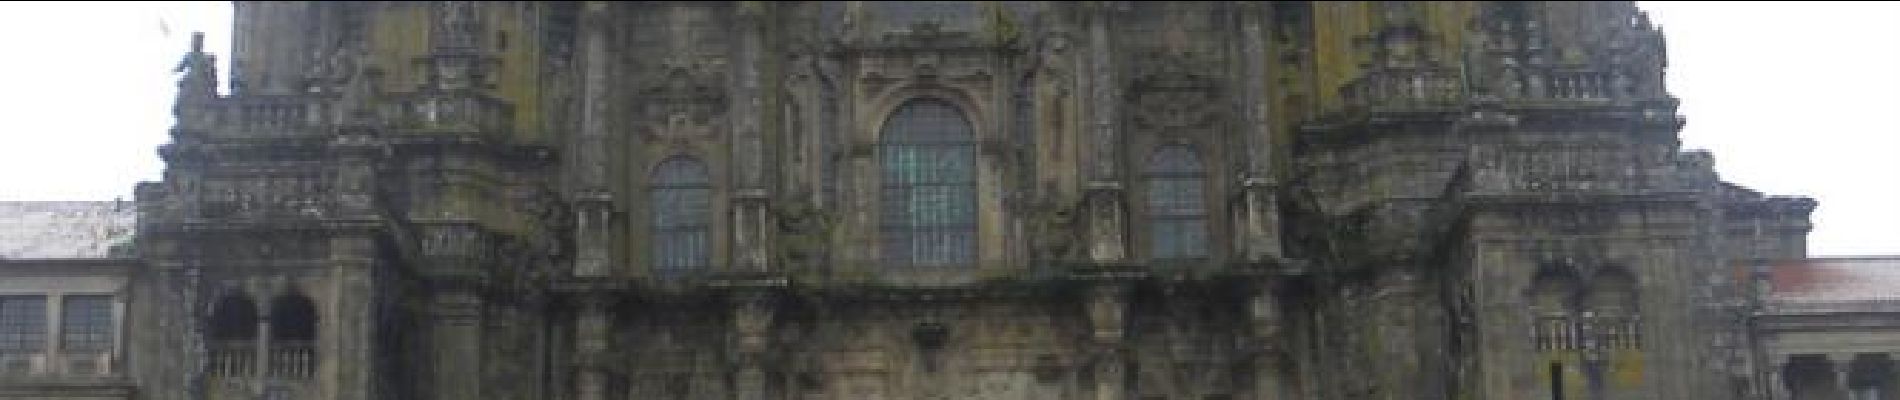 Punto di interesse Santiago de Compostela - Santiago - Photo